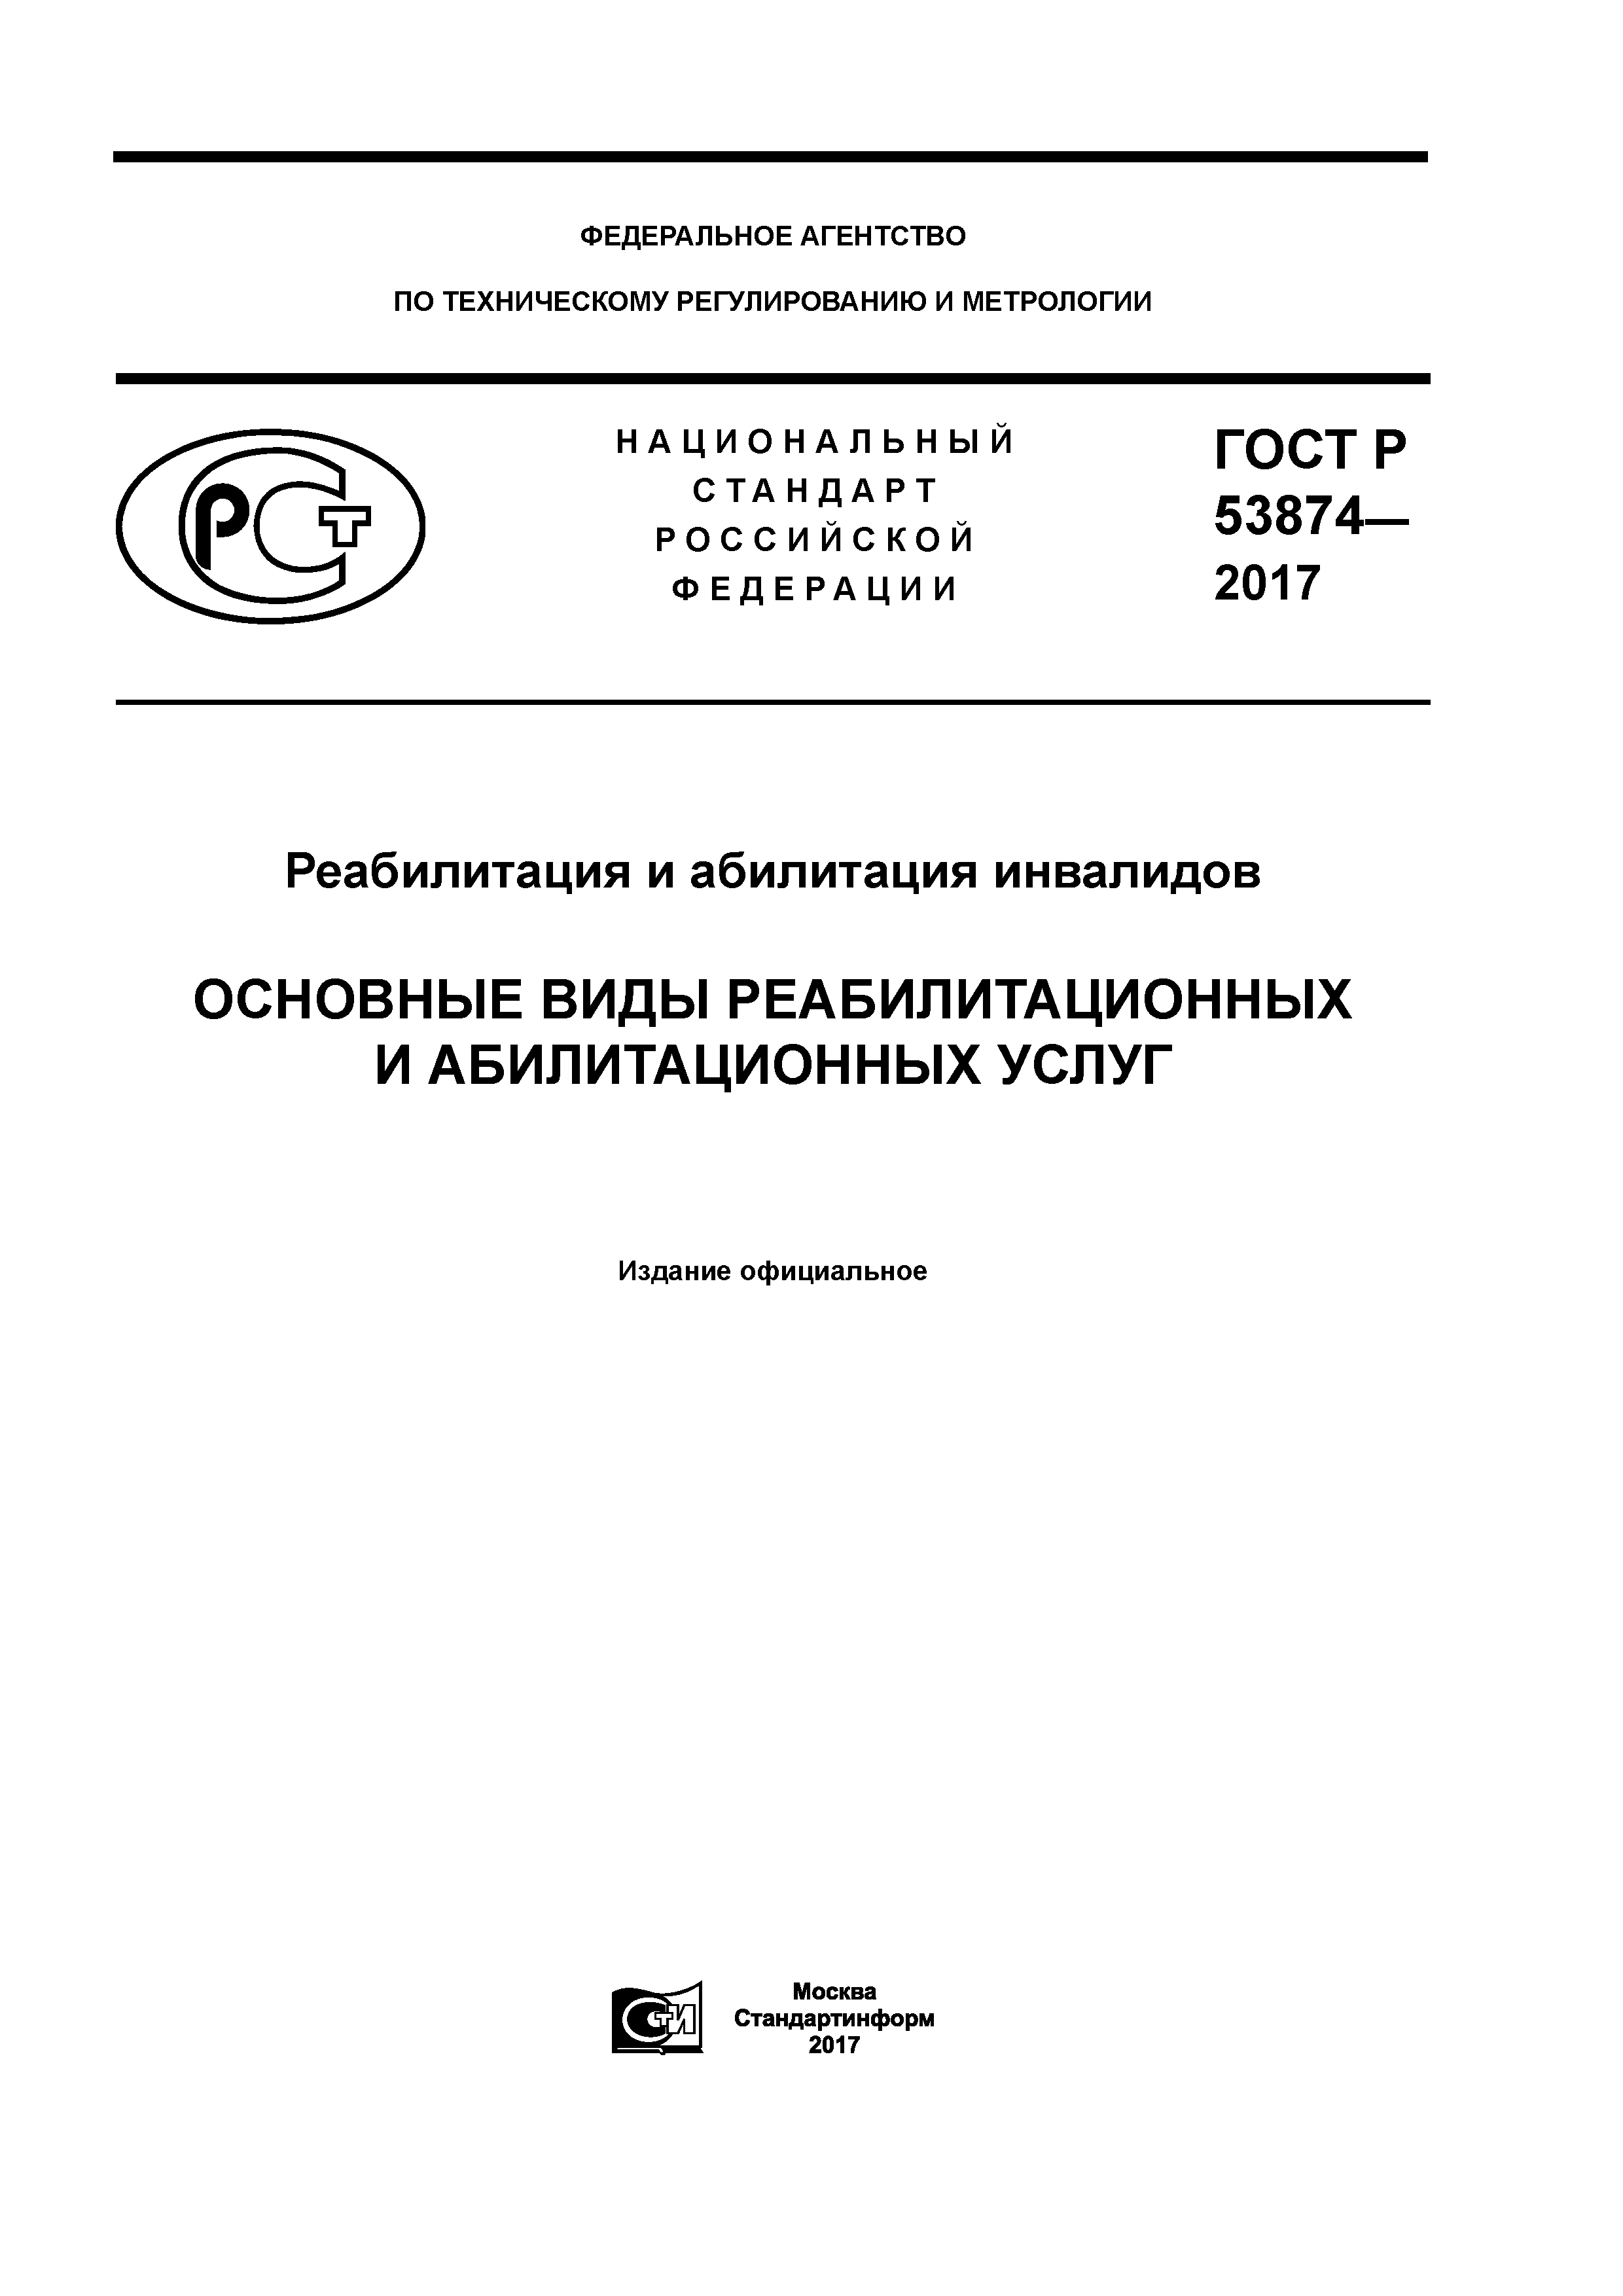 ГОСТ Р 53874-2017